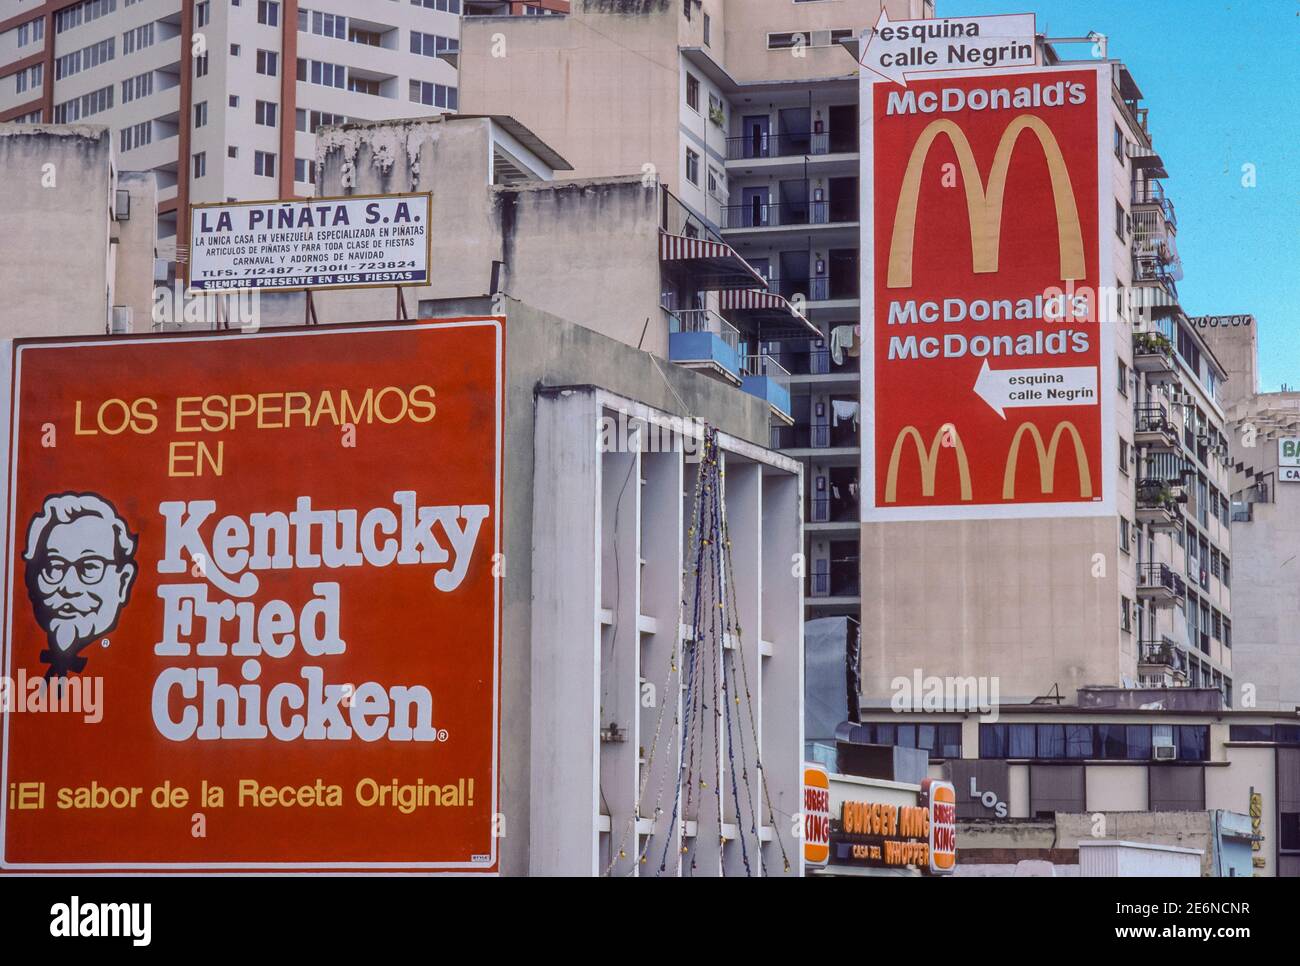 CARACAS, VENEZUELA, 1988 - Billboards on downtown buildings for McDonalds and Kentucky Fried Chicken. Stock Photo